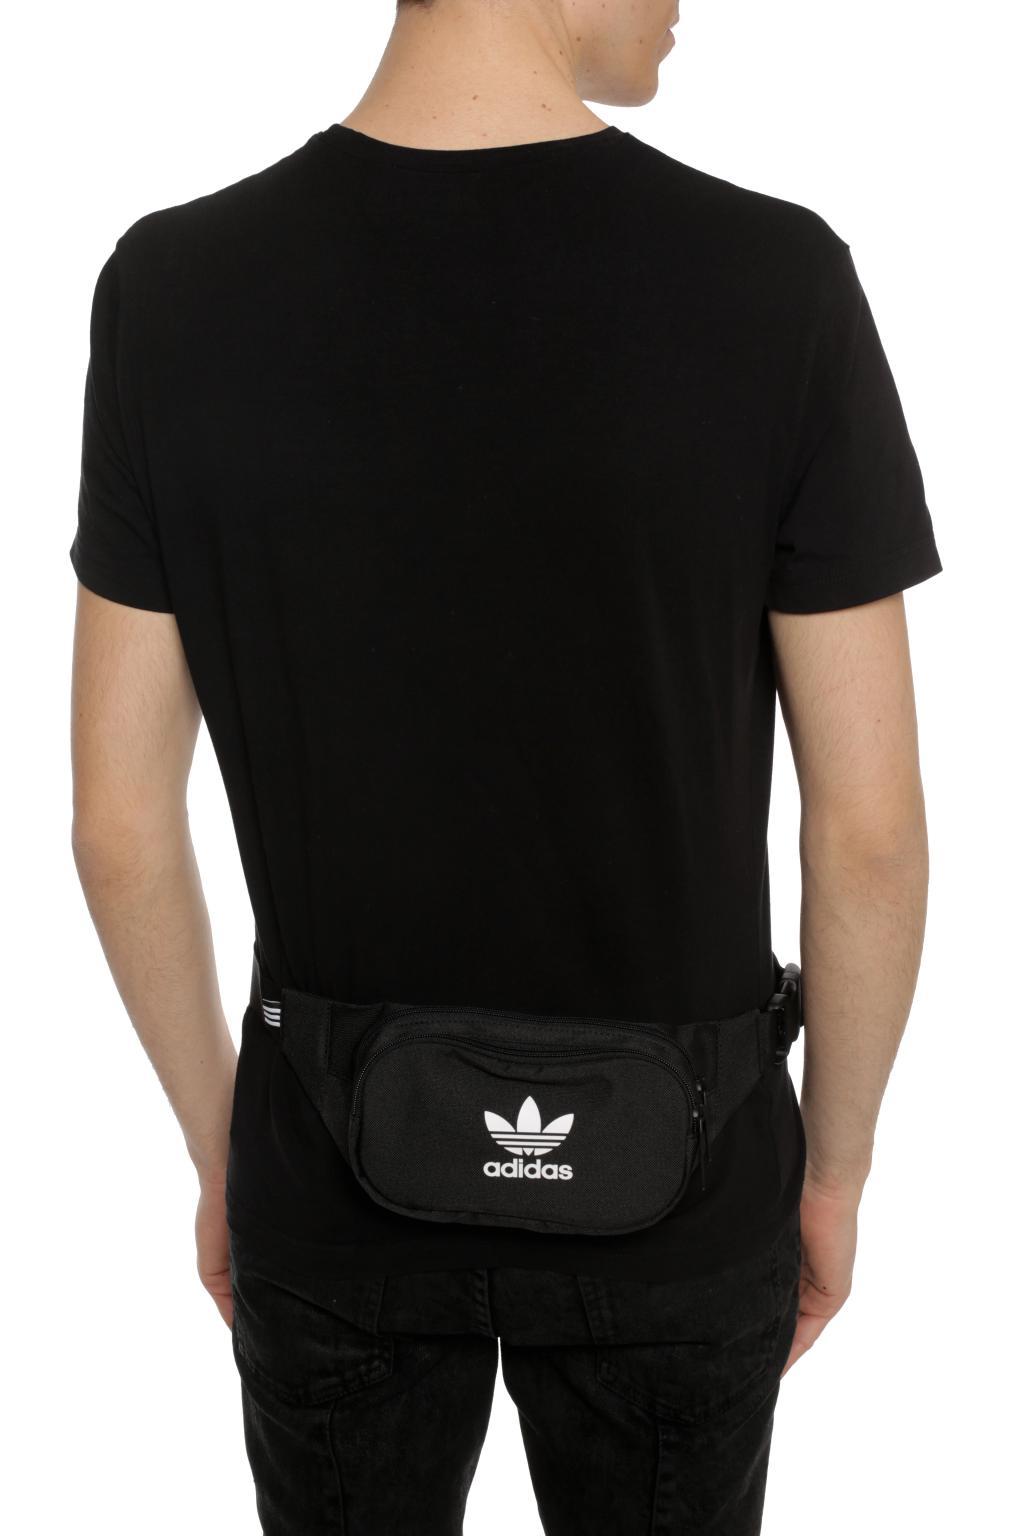 adidas Originals Synthetic Logo Belt Bag in Black - Lyst